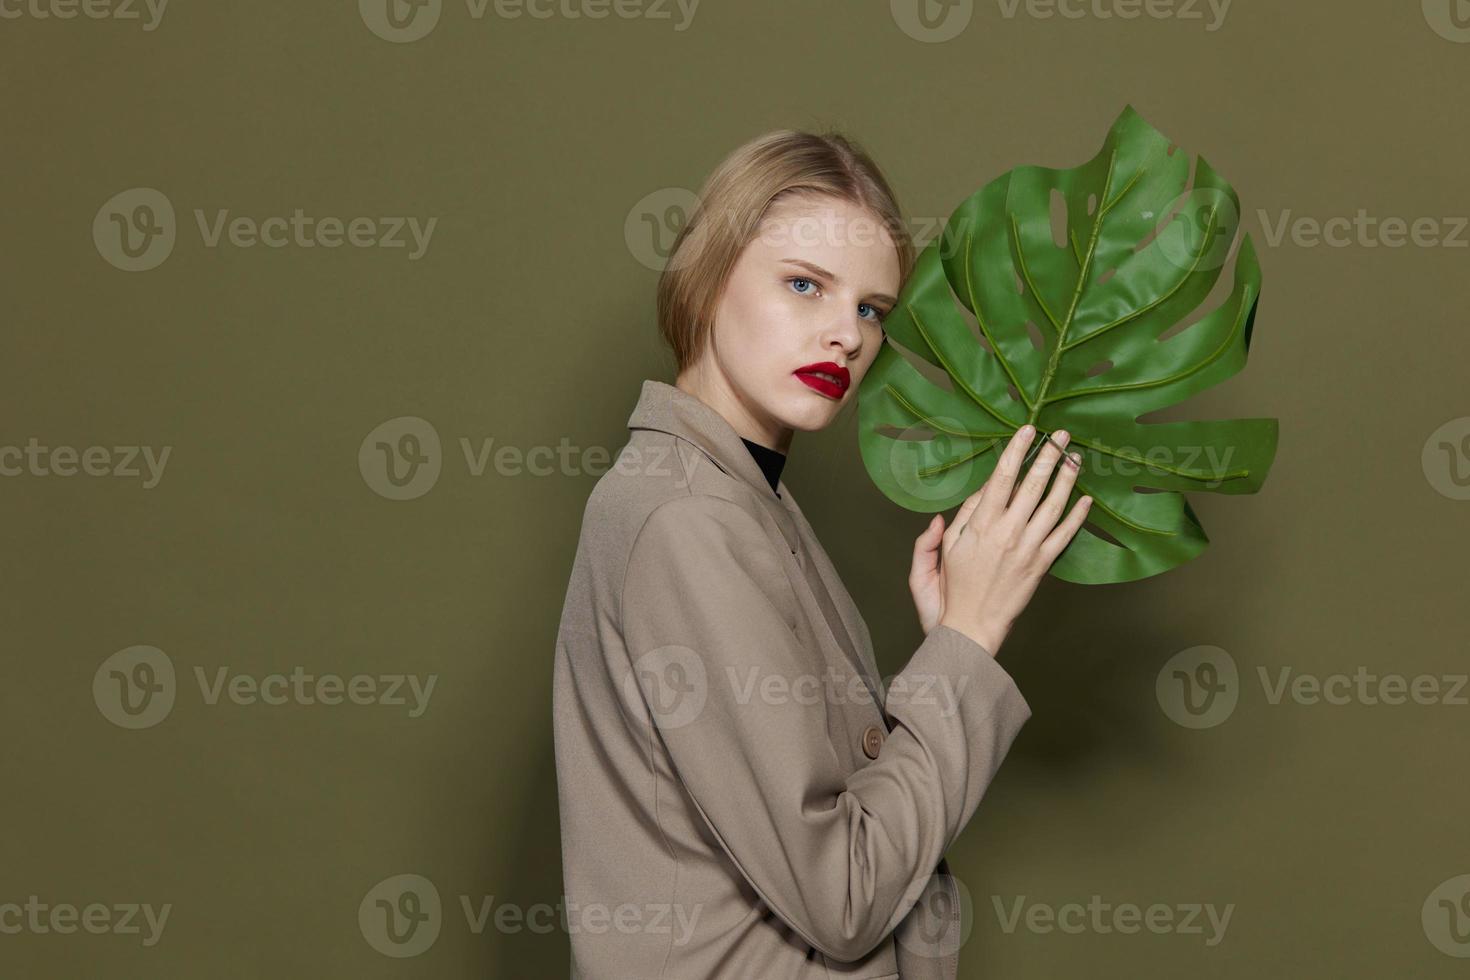 bonita mulher verde Palma folha casaco brilhante Maquiagem estúdio modelo inalterado foto